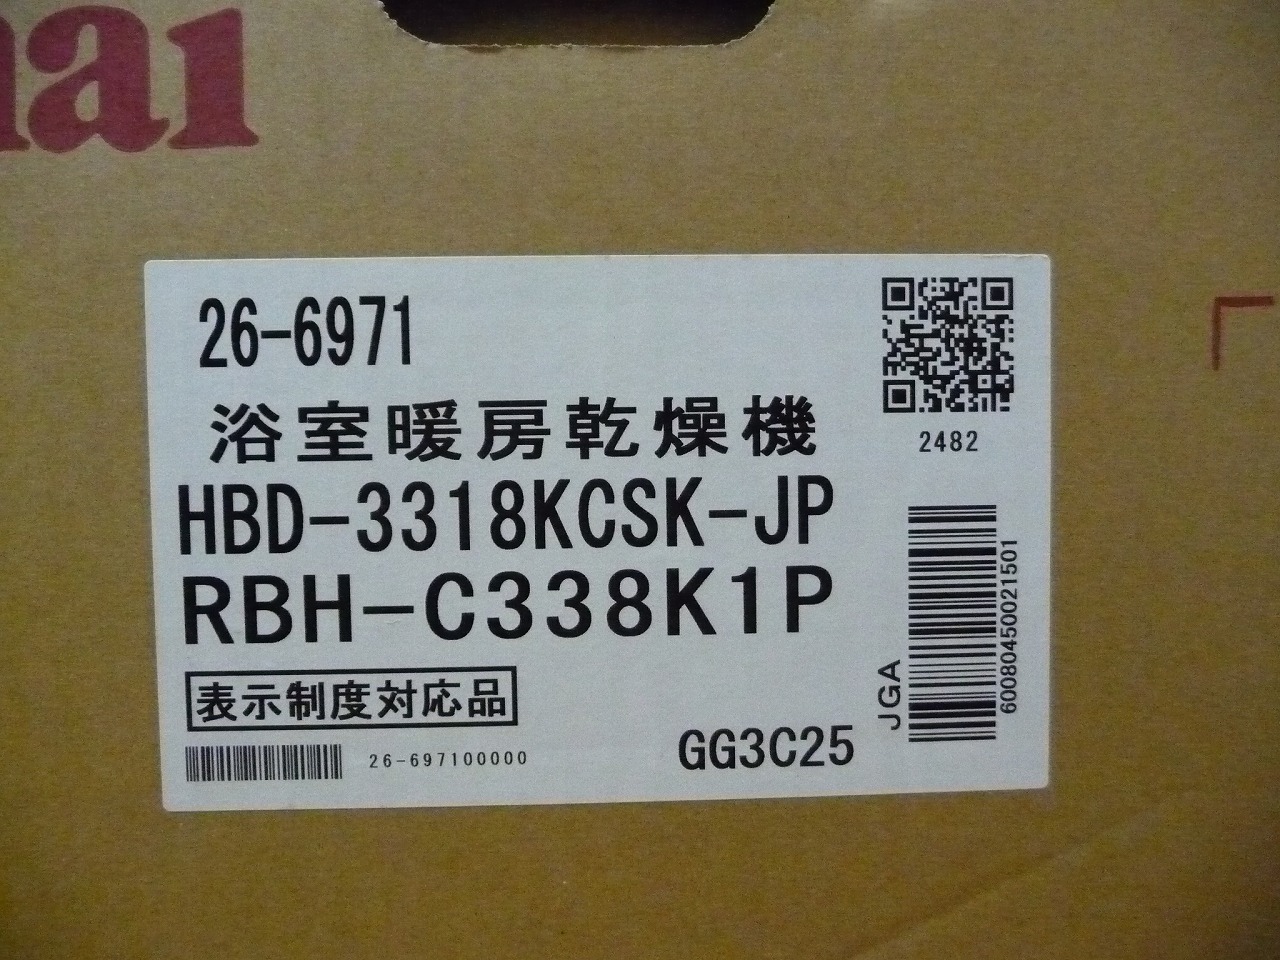 RBH-C338K1P